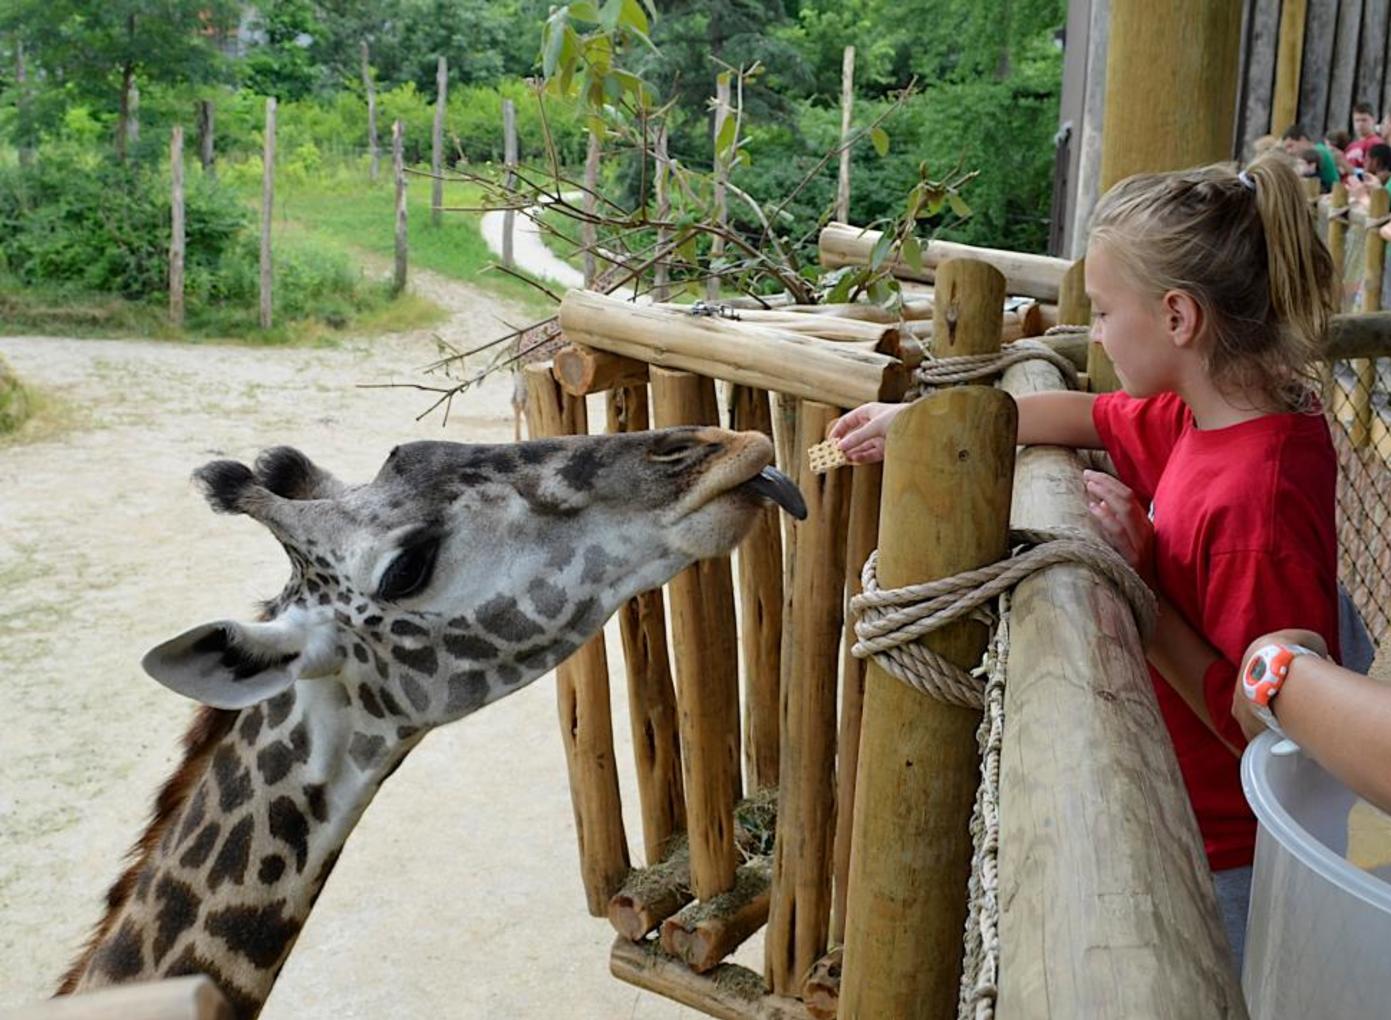 Feeding a giraffe at Cincinnati Zoo &amp;amp; Botanical Garden (photo: Michelle Curley)